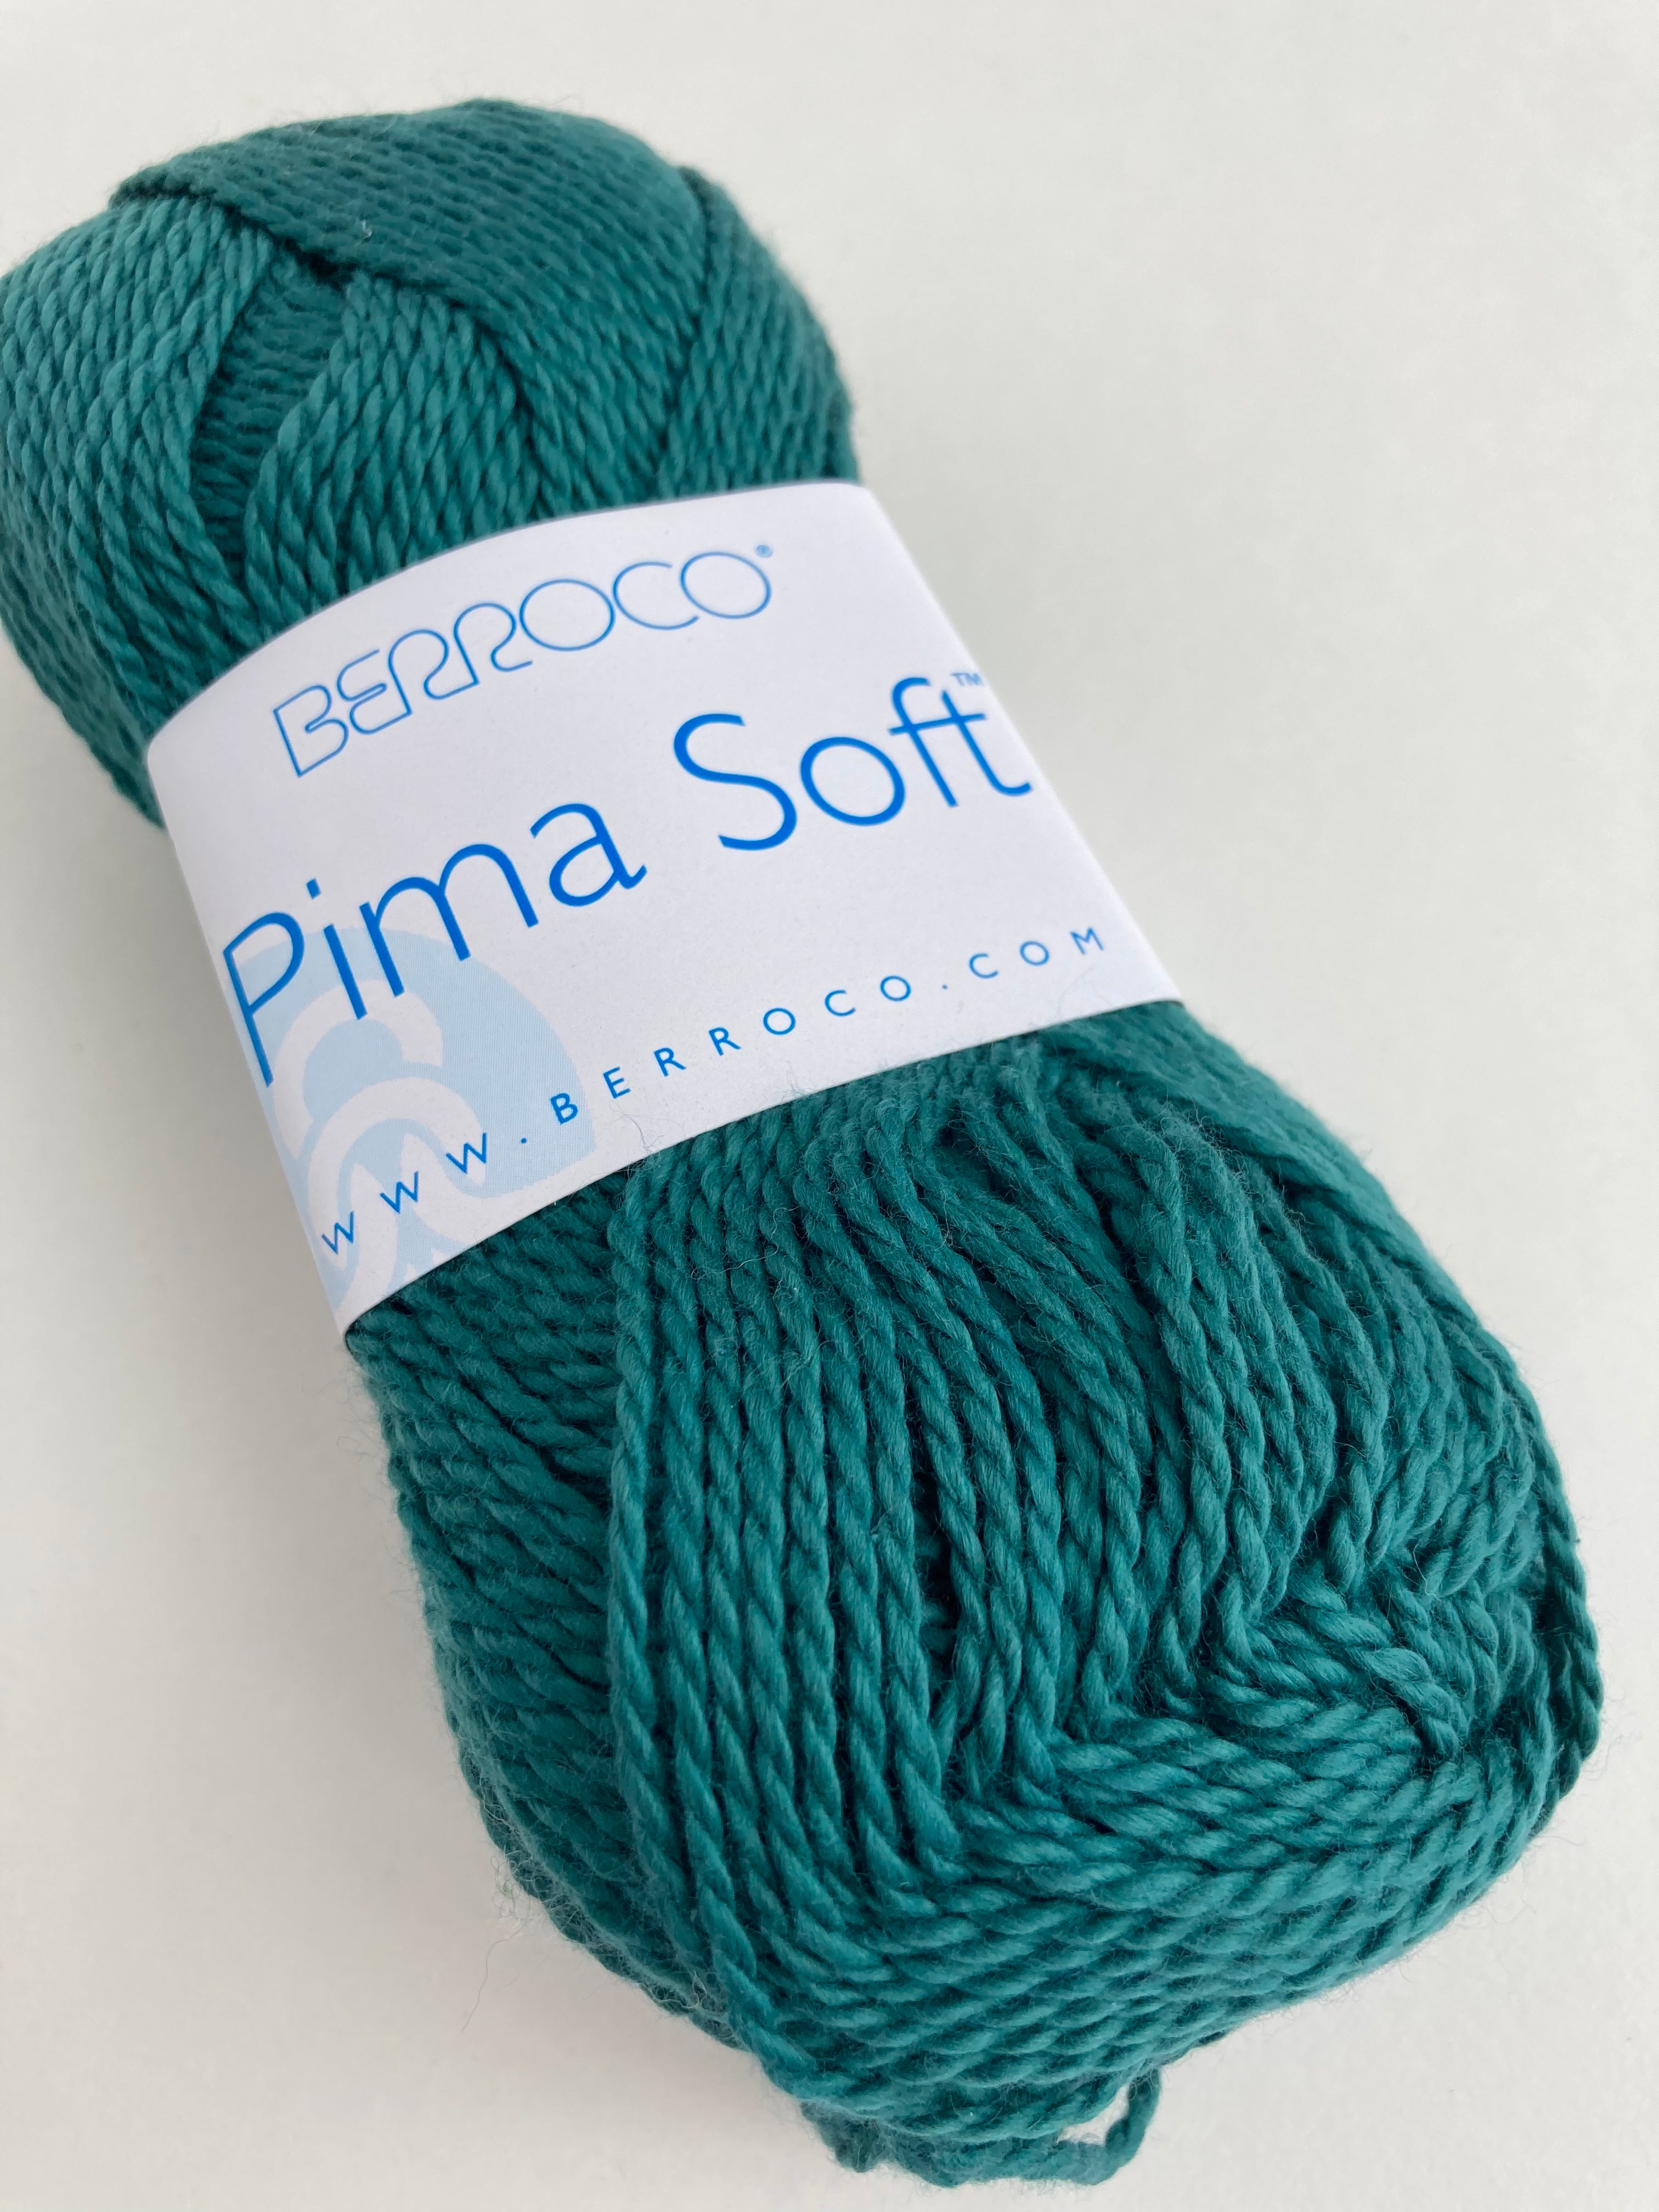 Ocean 4630 - Pima Soft from Berroco